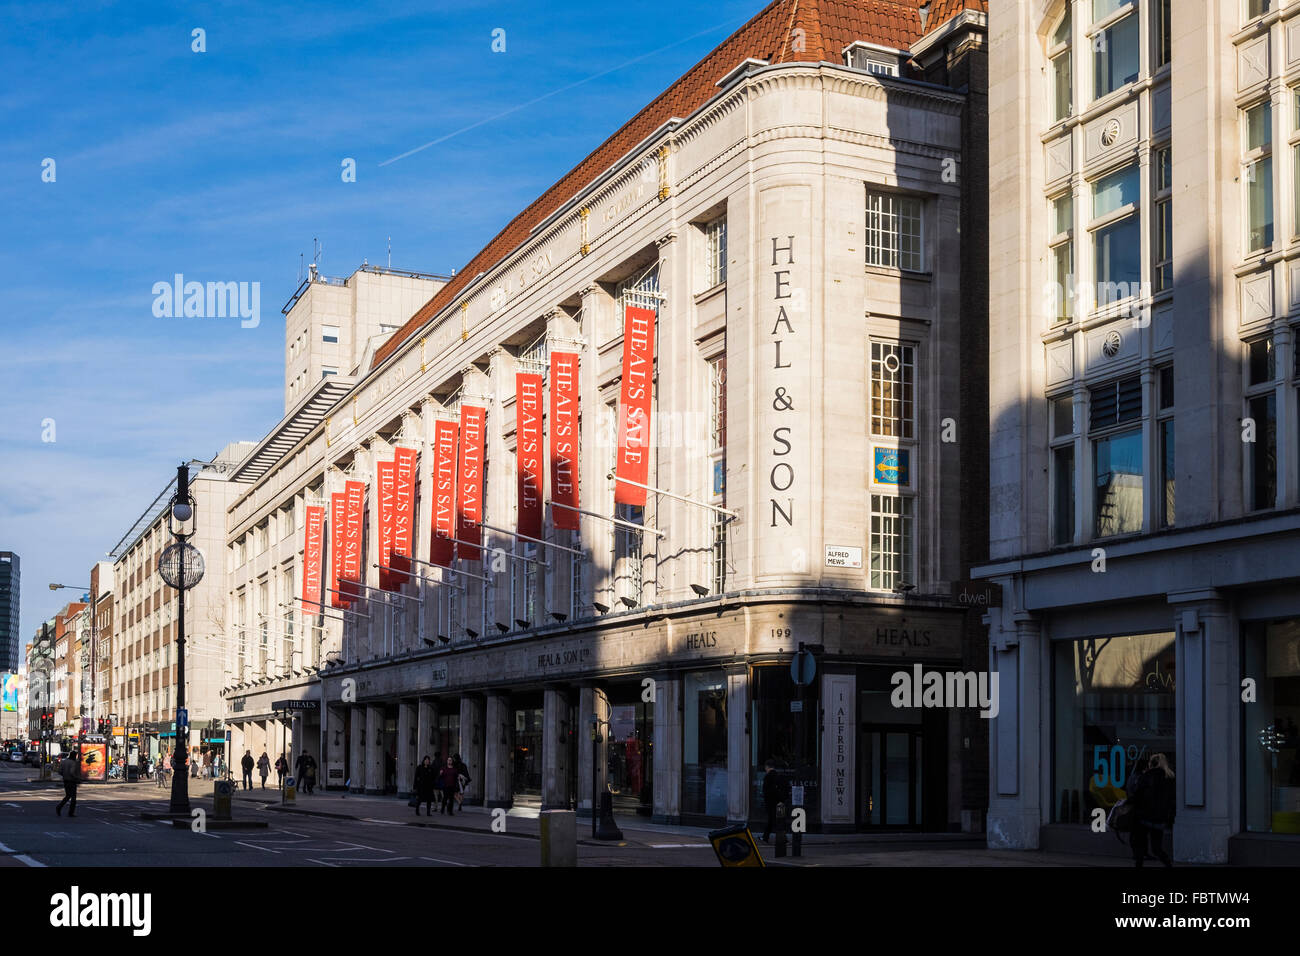 Heal&Son store, Tottenham Court road, London, England, U.K. Stock Photo